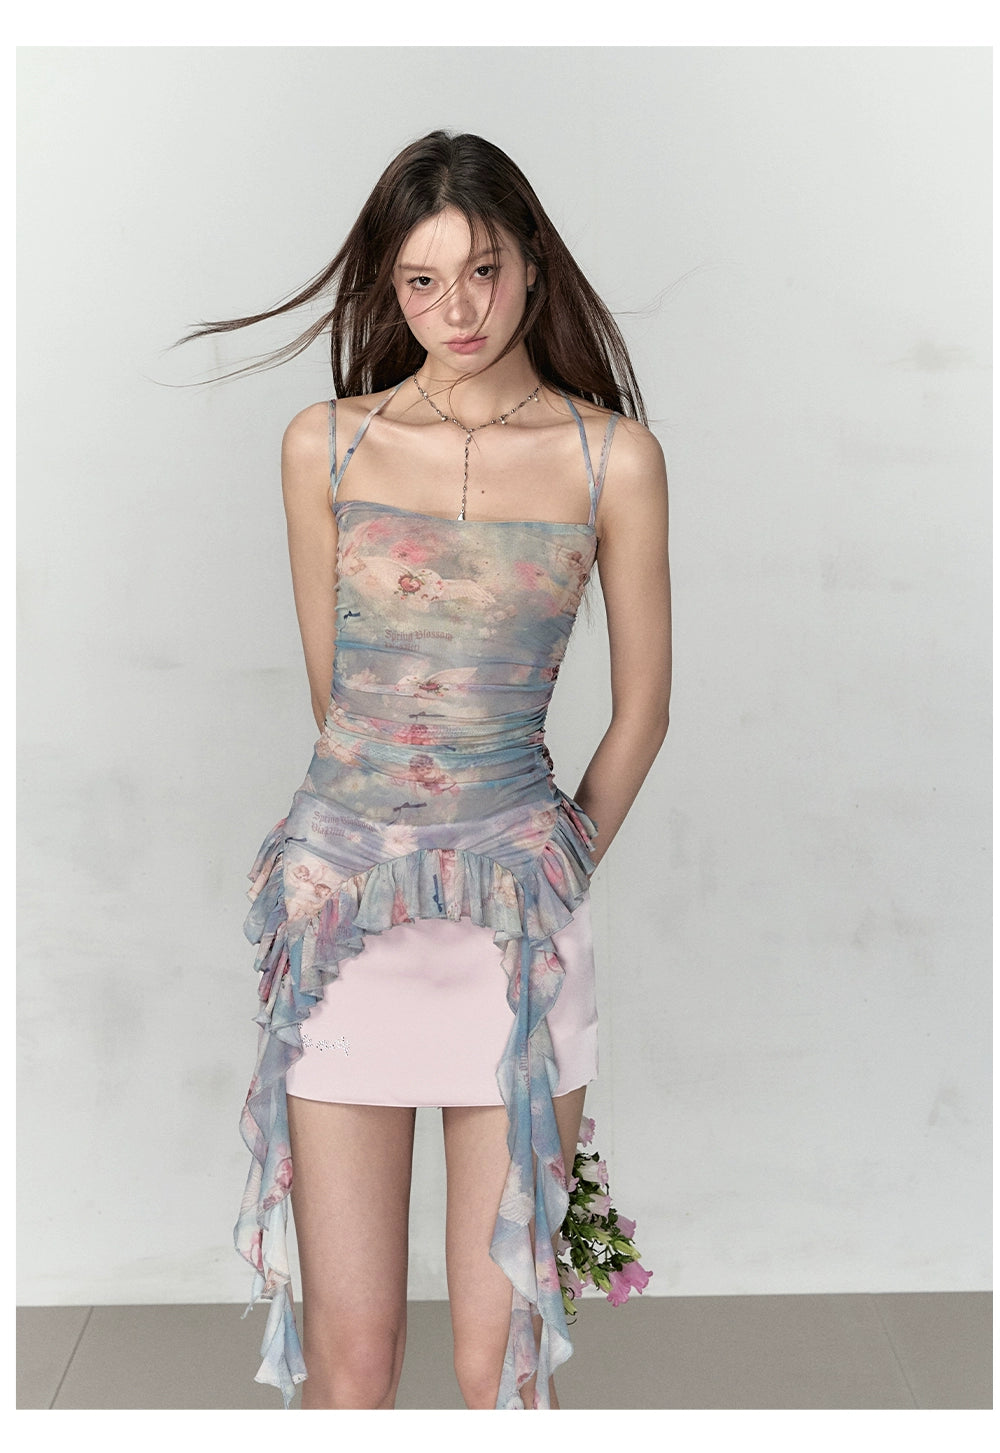 Pink &amp; Silver A-line Mini Skirt - CHINASQUAD